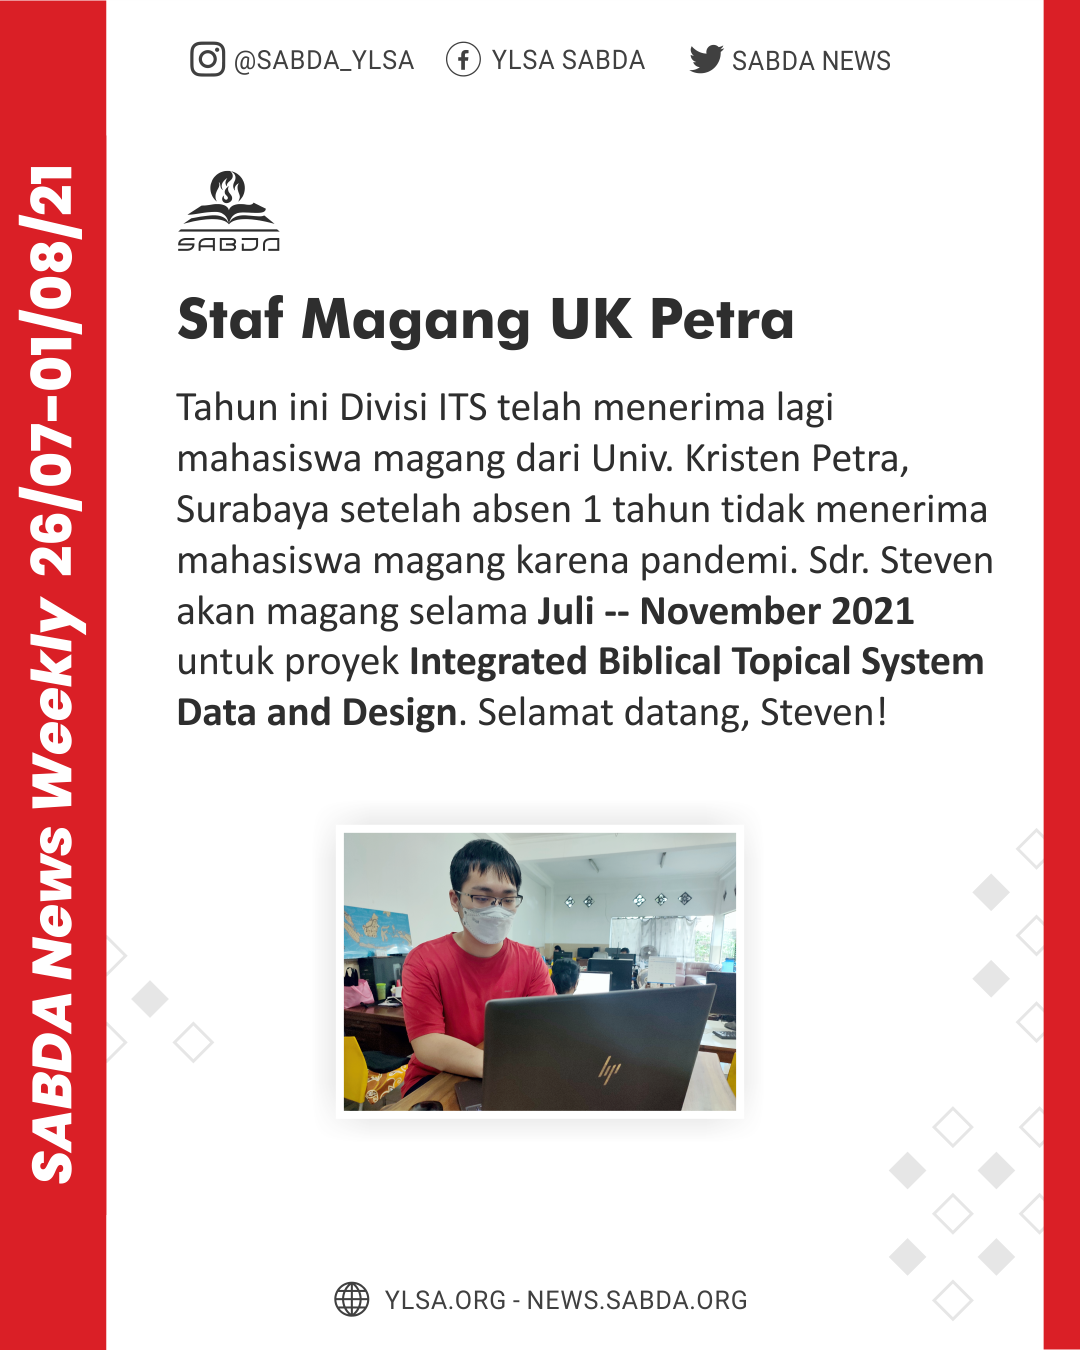 Staff Magang UK Petra